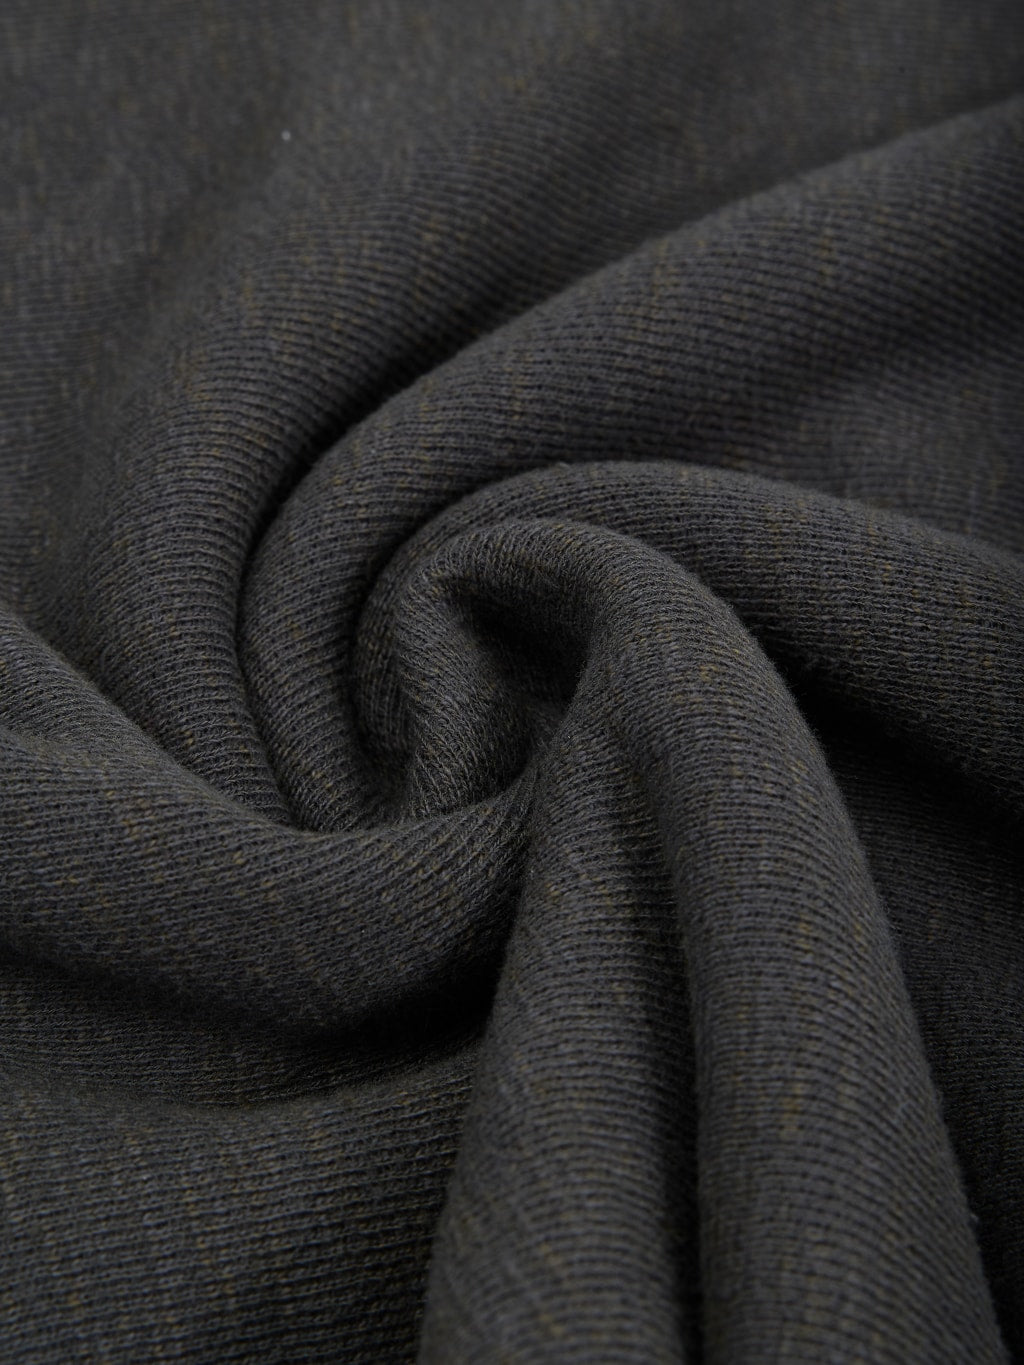 loop and weft big loopback fleece side panel sweatshirt black texture